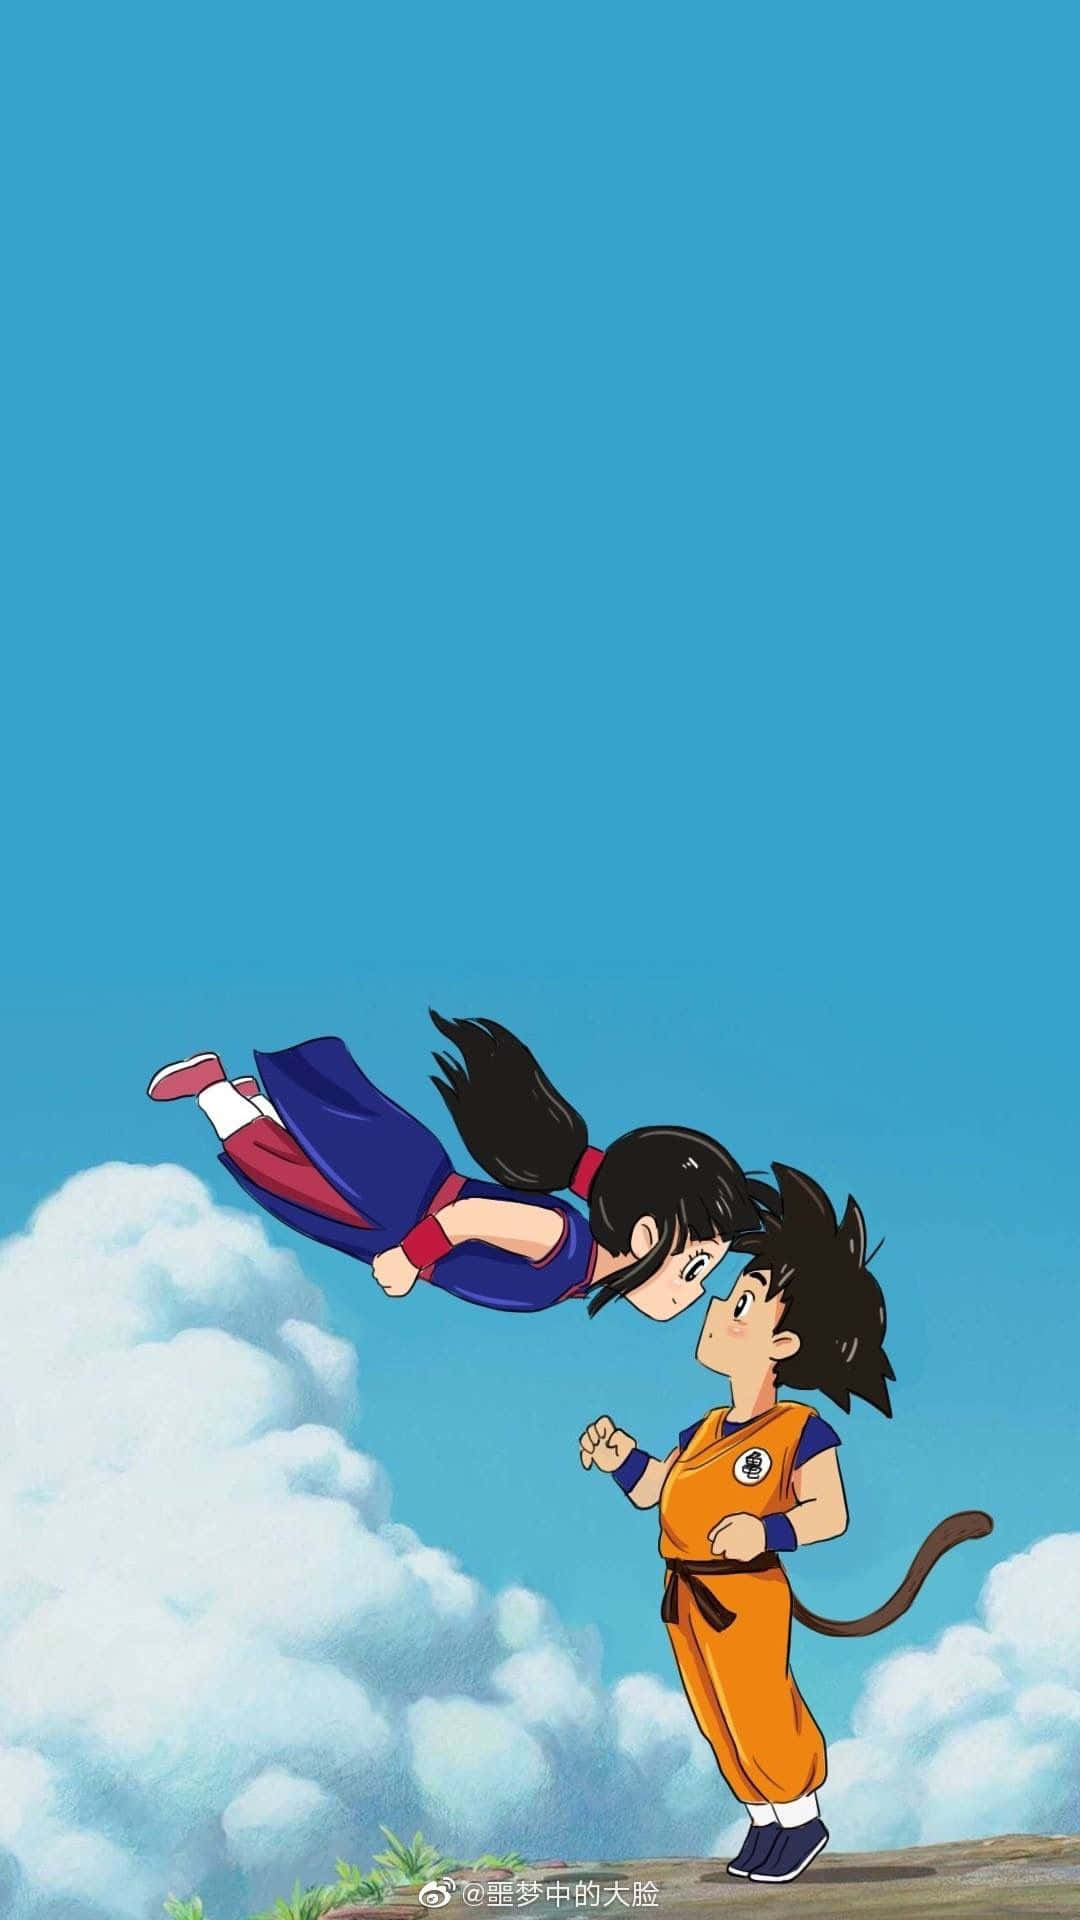 Minimalist Goku And Chichi In Blue Sky Wallpaper